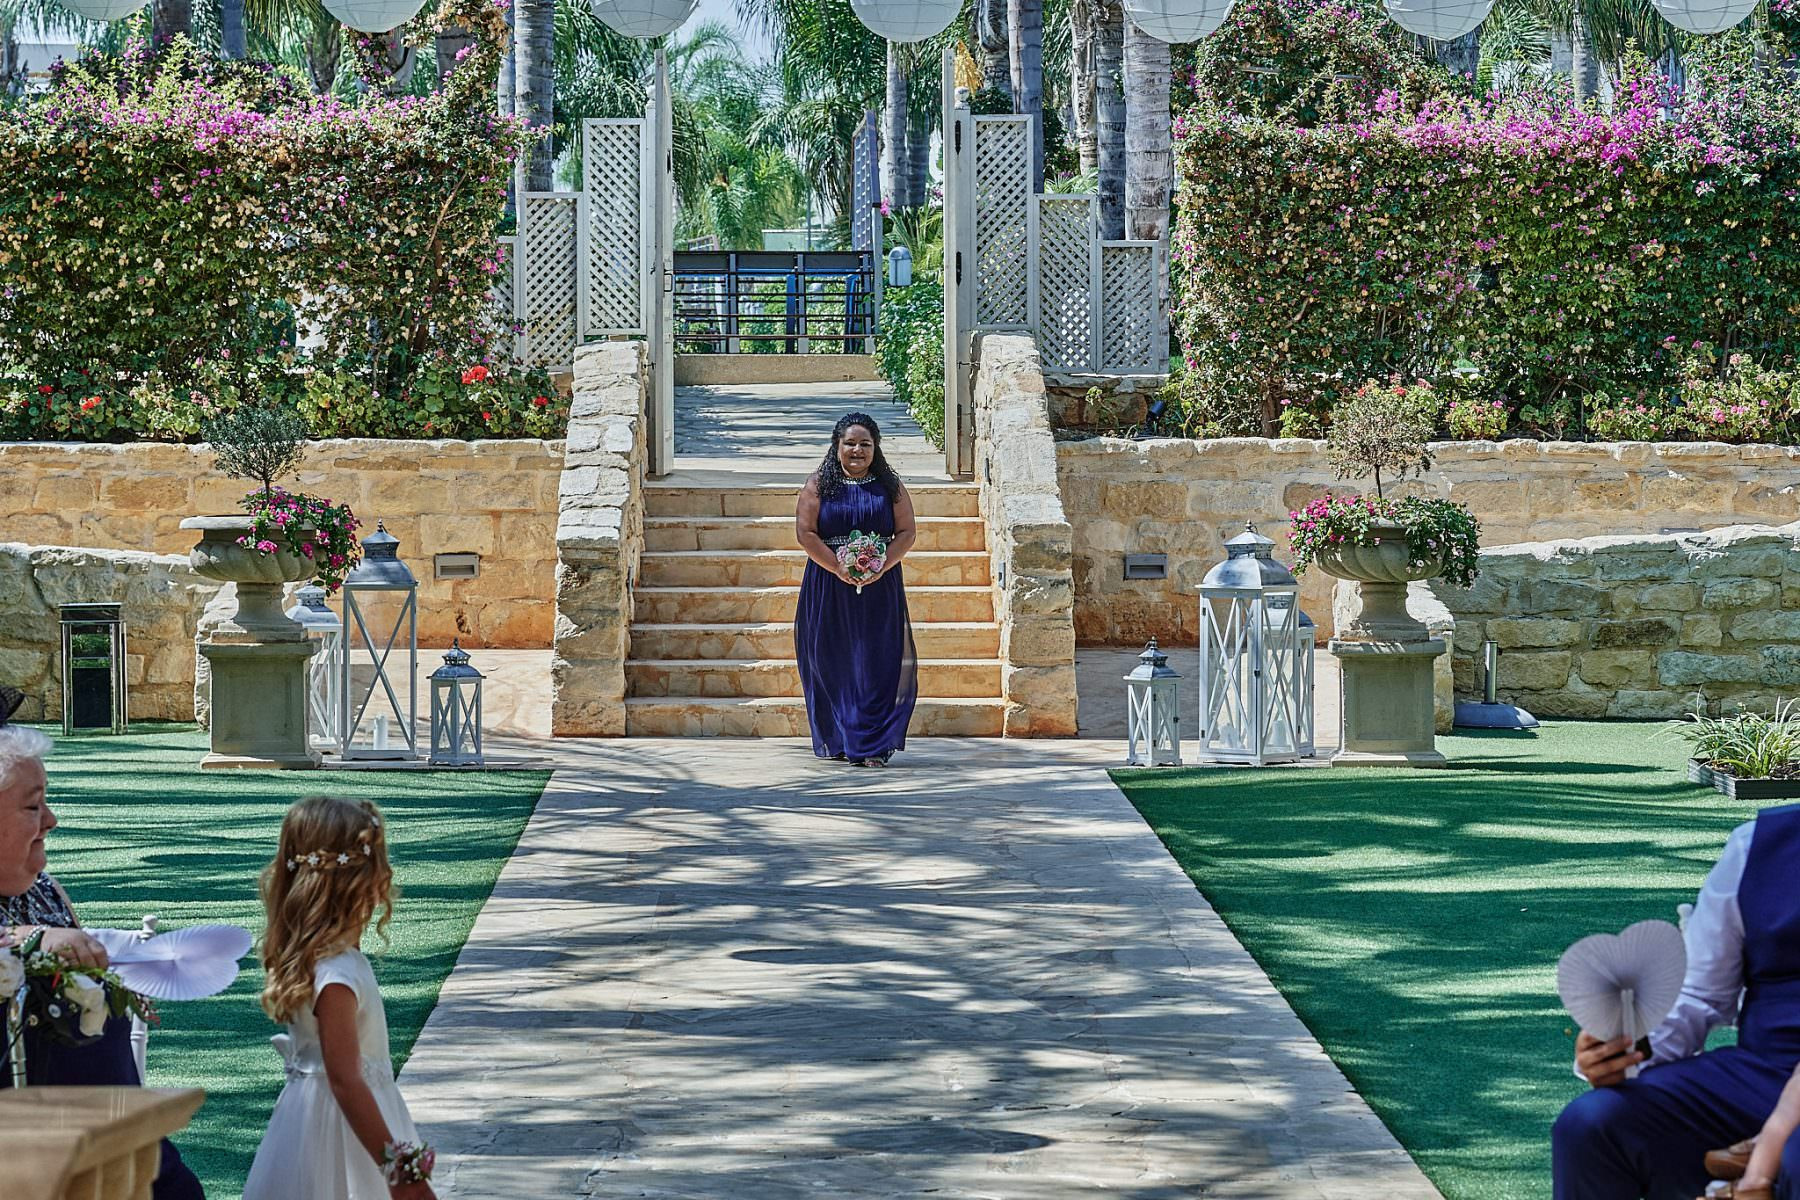 Wedding photograph, taken in Cyprus by Richard King